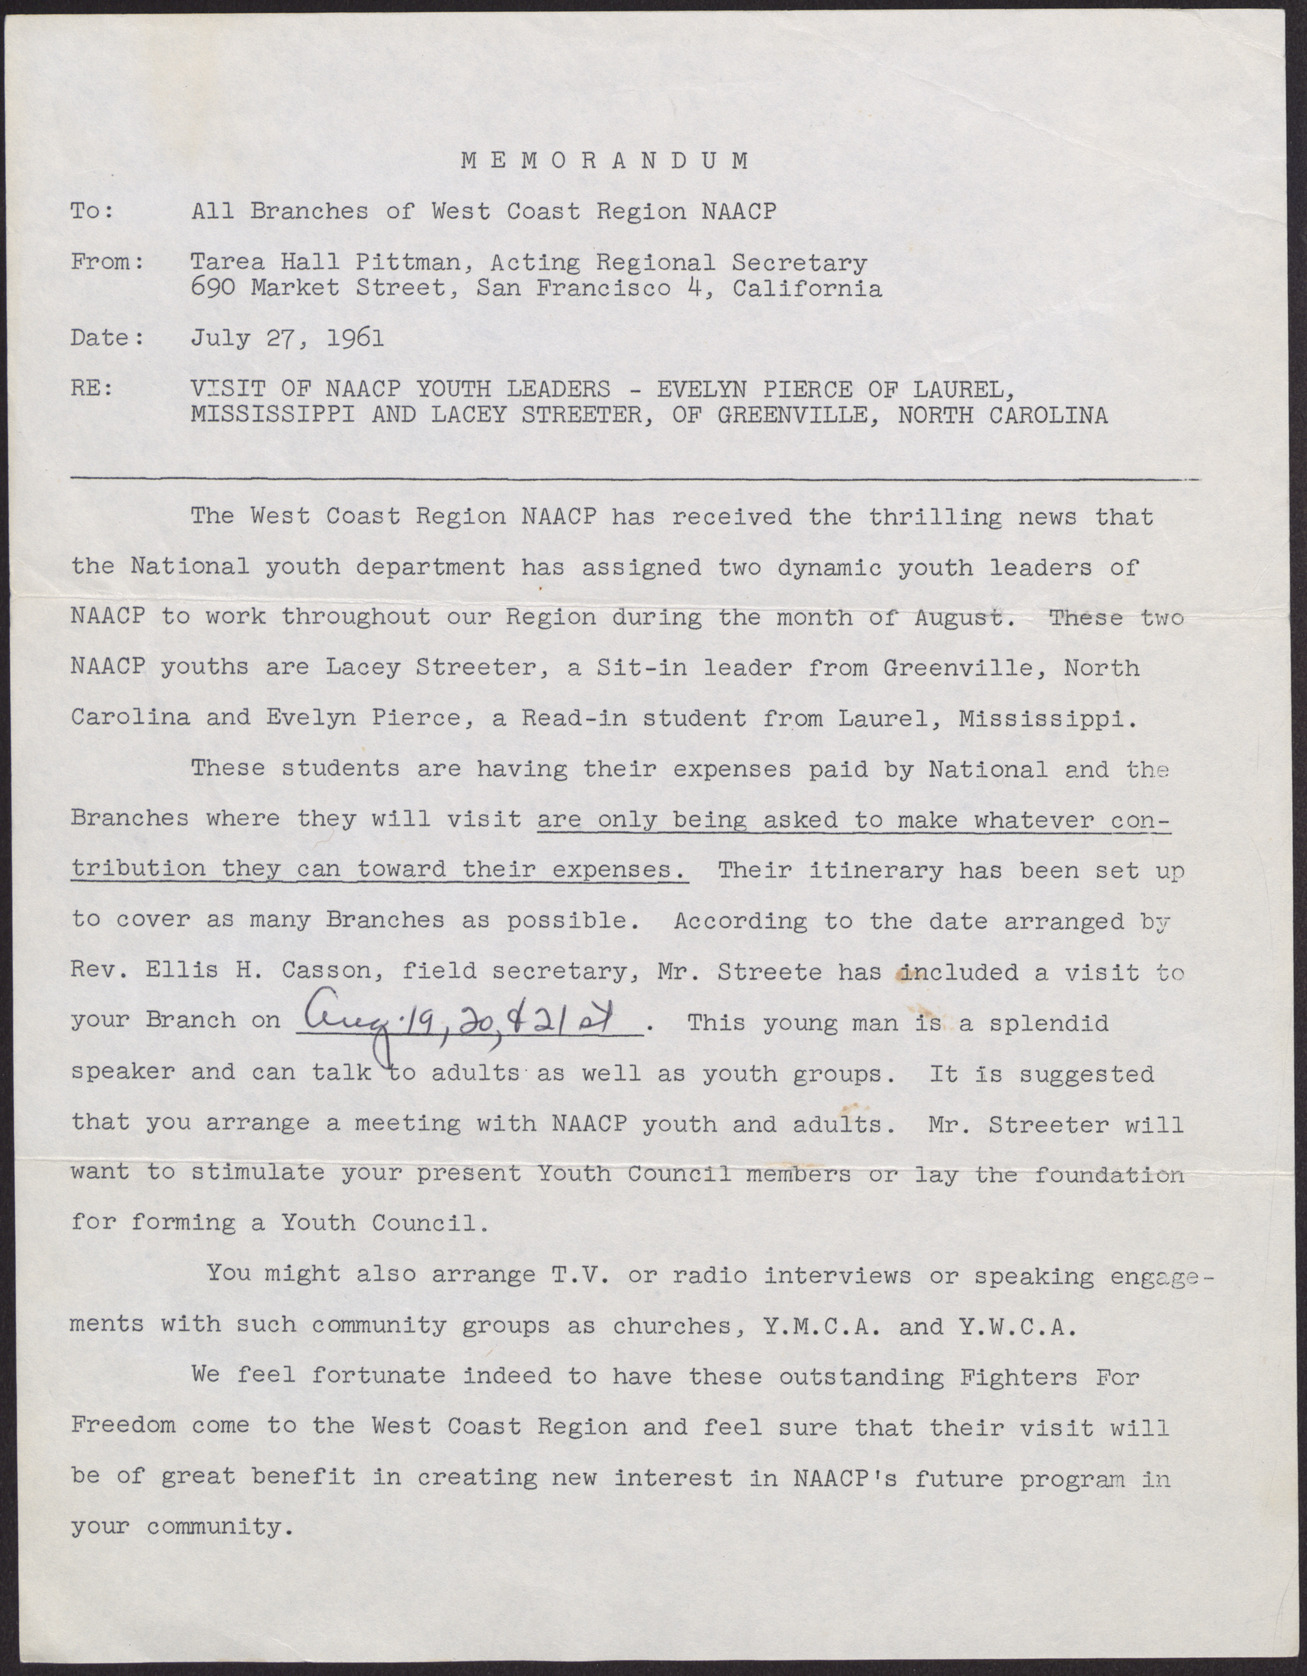 Memorandum to All Branches of West Coast Region NAACP from Tarea Hall Pittman, July 27, 1961